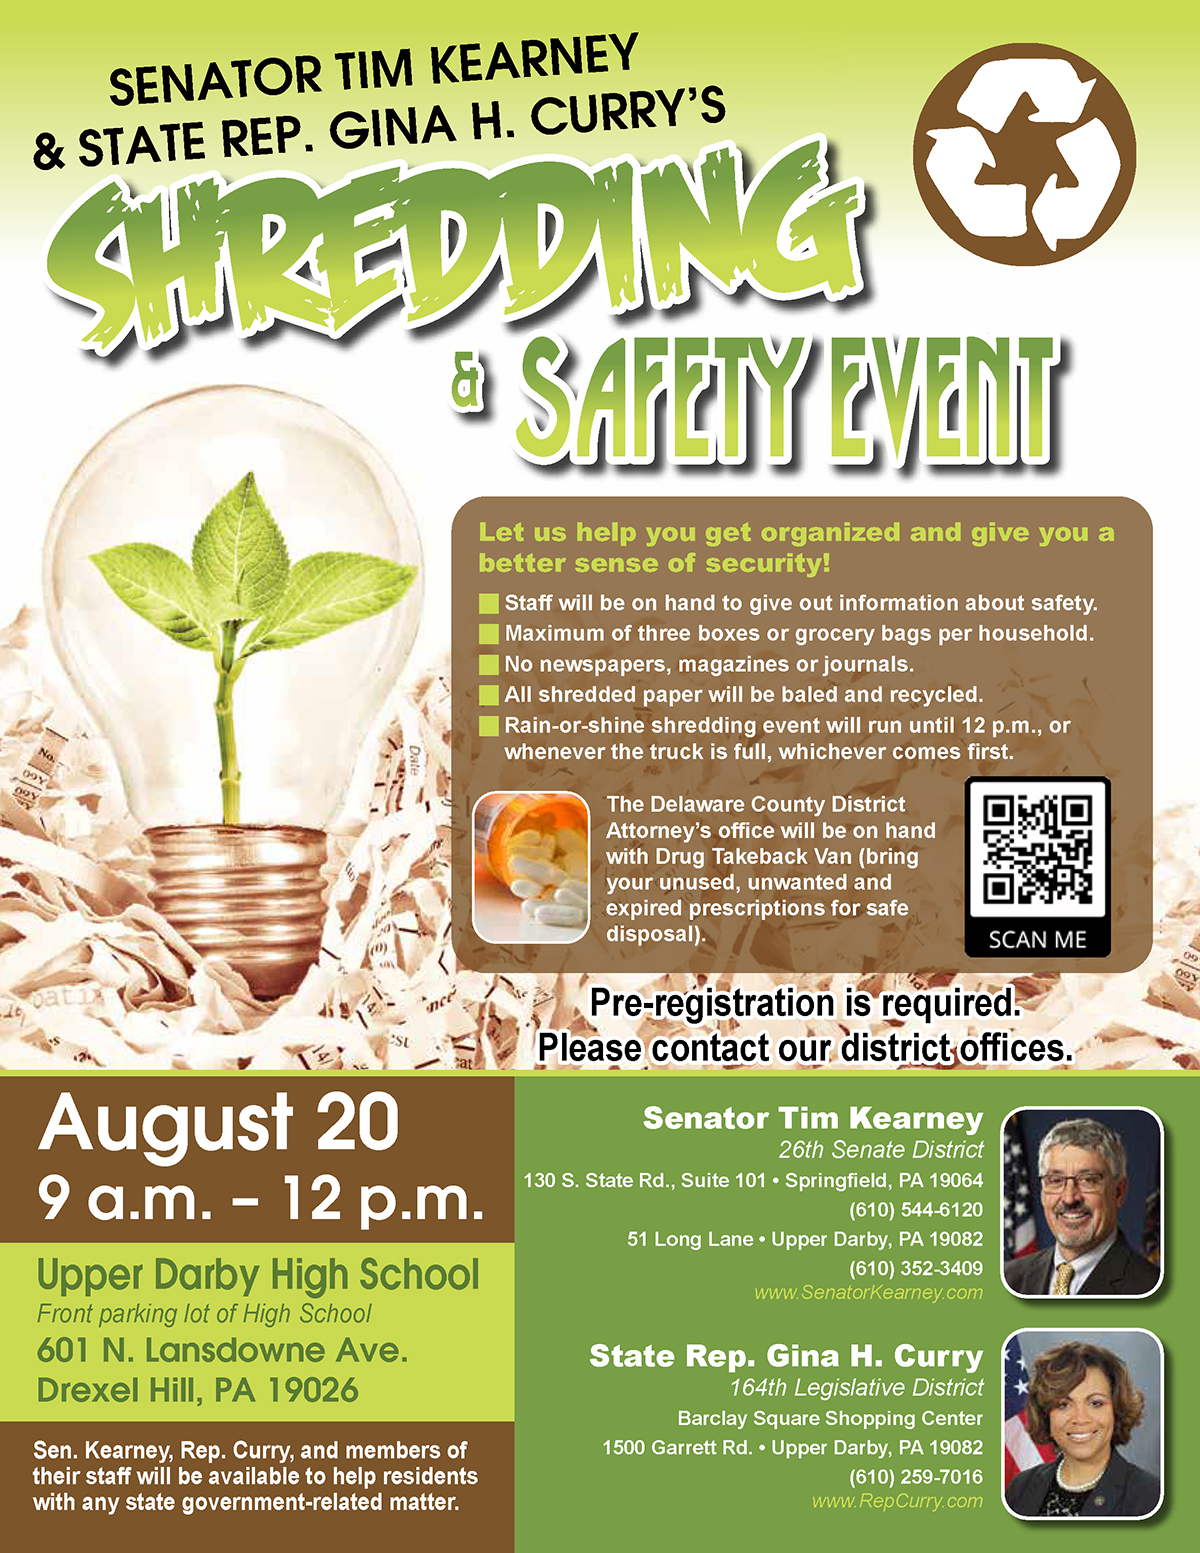 Shredding & Safety Event - August 20, 2022